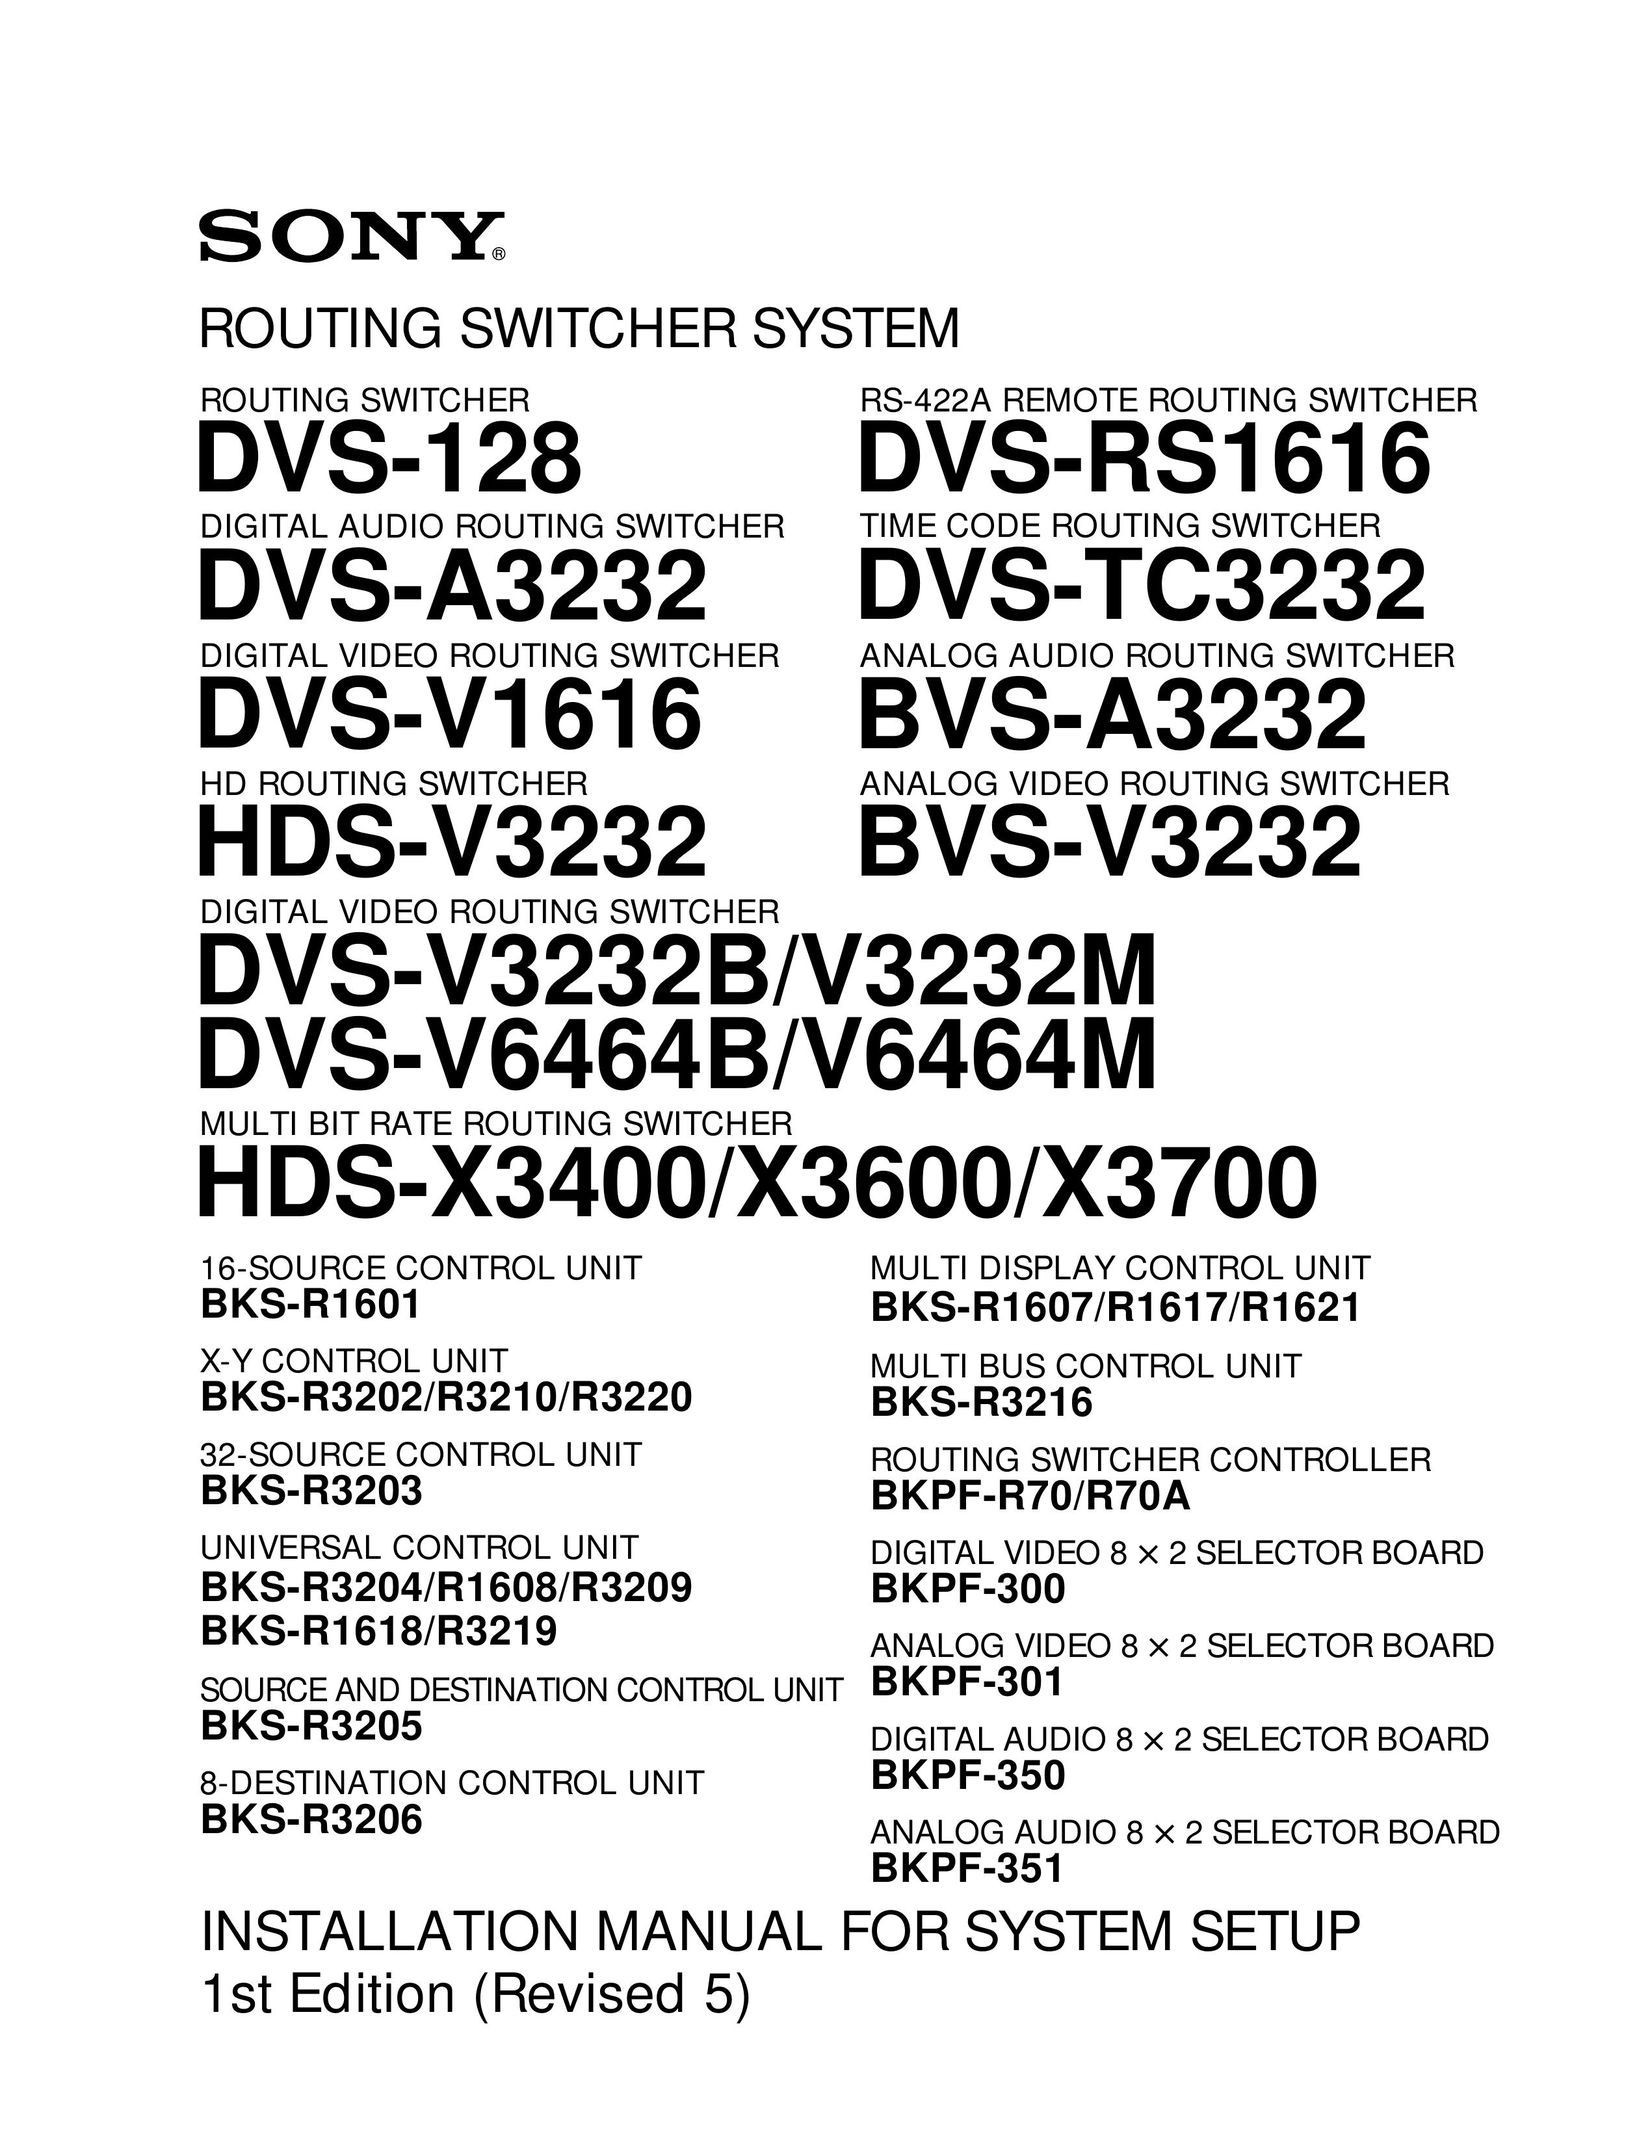 Sony DVS-V1616 Network Router User Manual